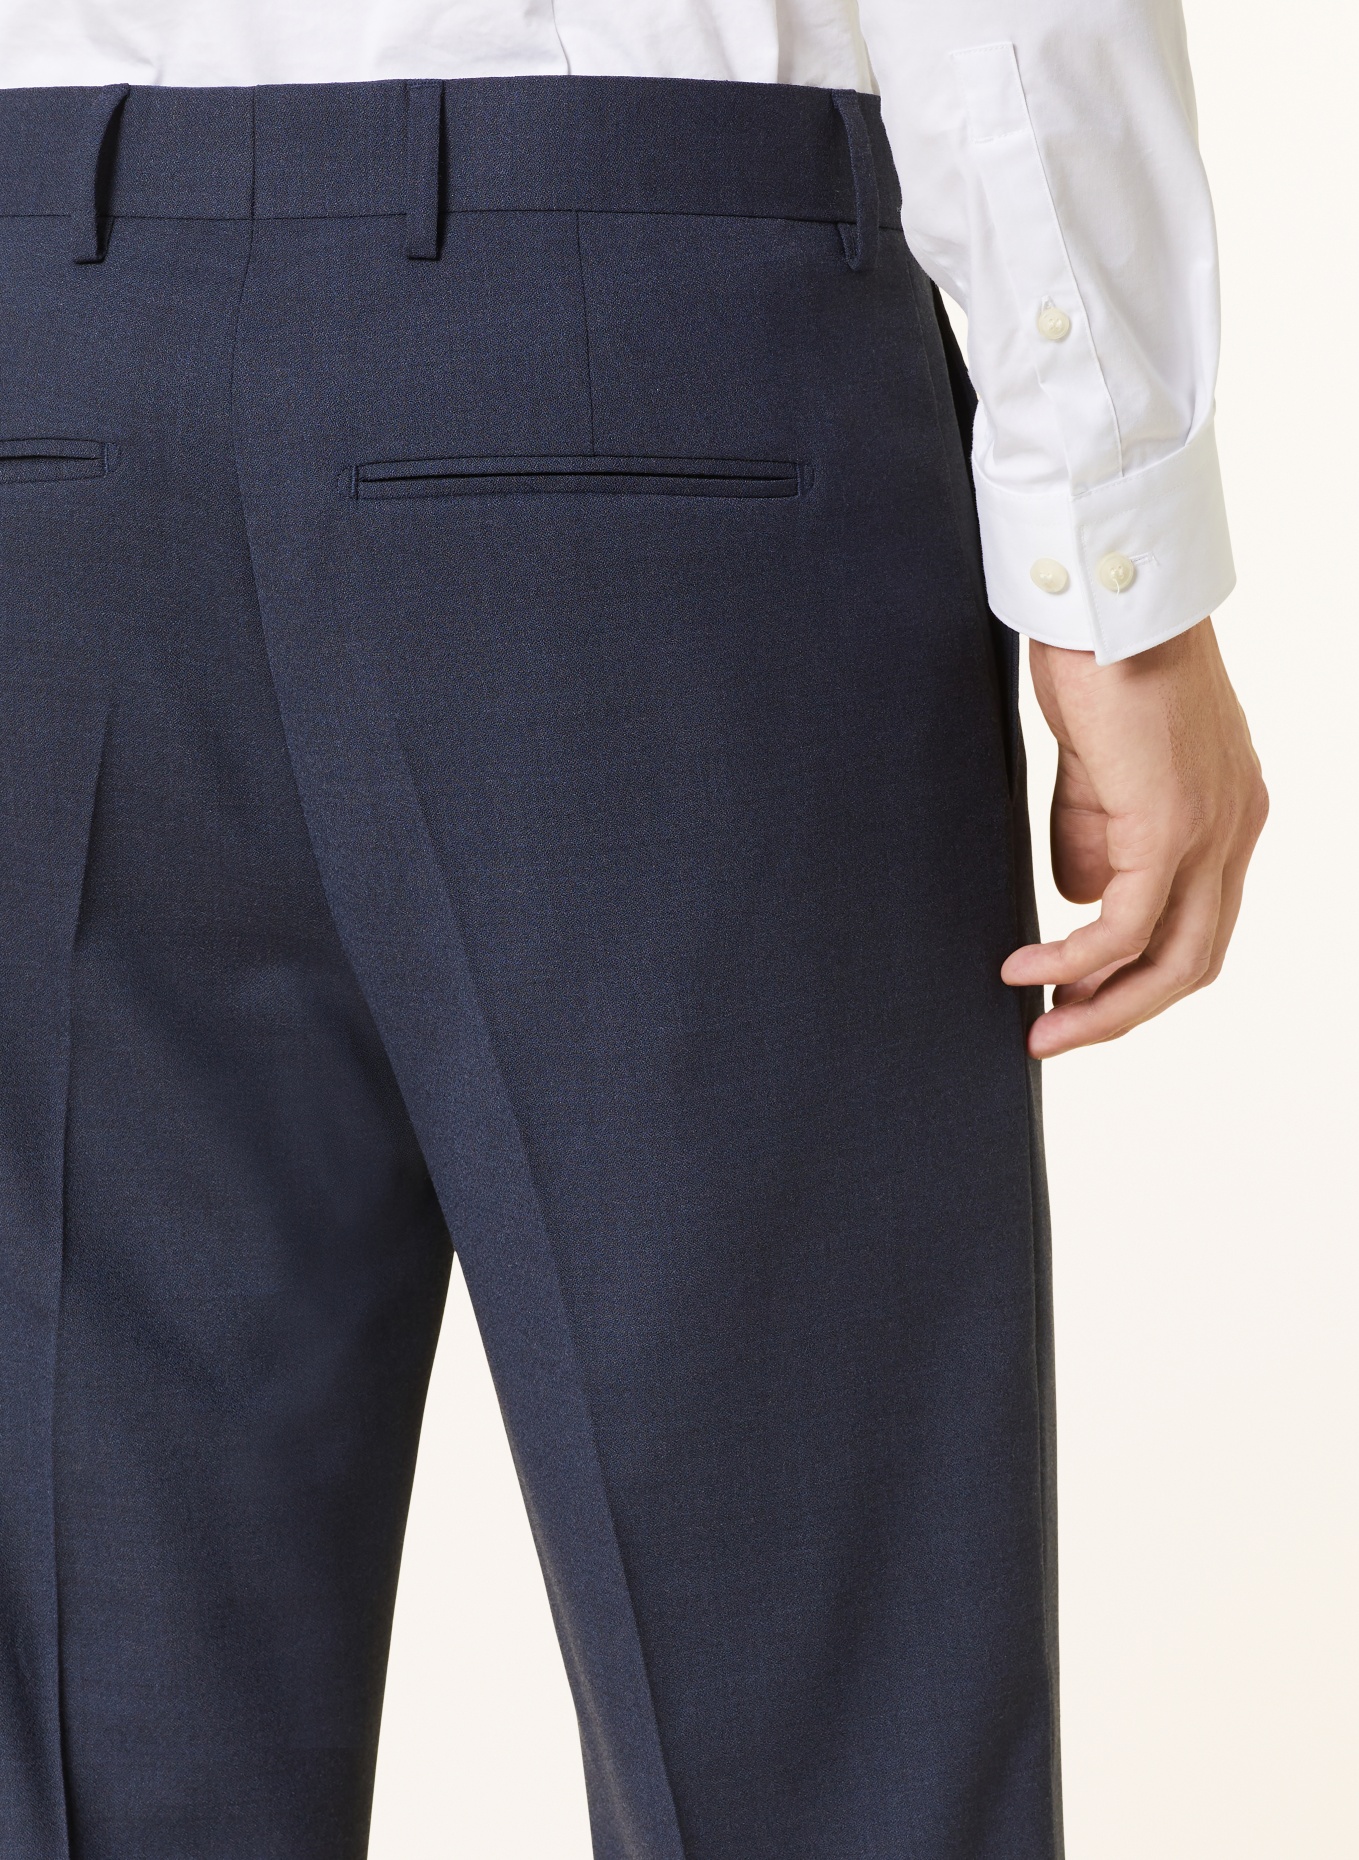 TIGER OF SWEDEN Suit trousers TENSE regular fit, Color: 231 Dusty blue (Image 6)